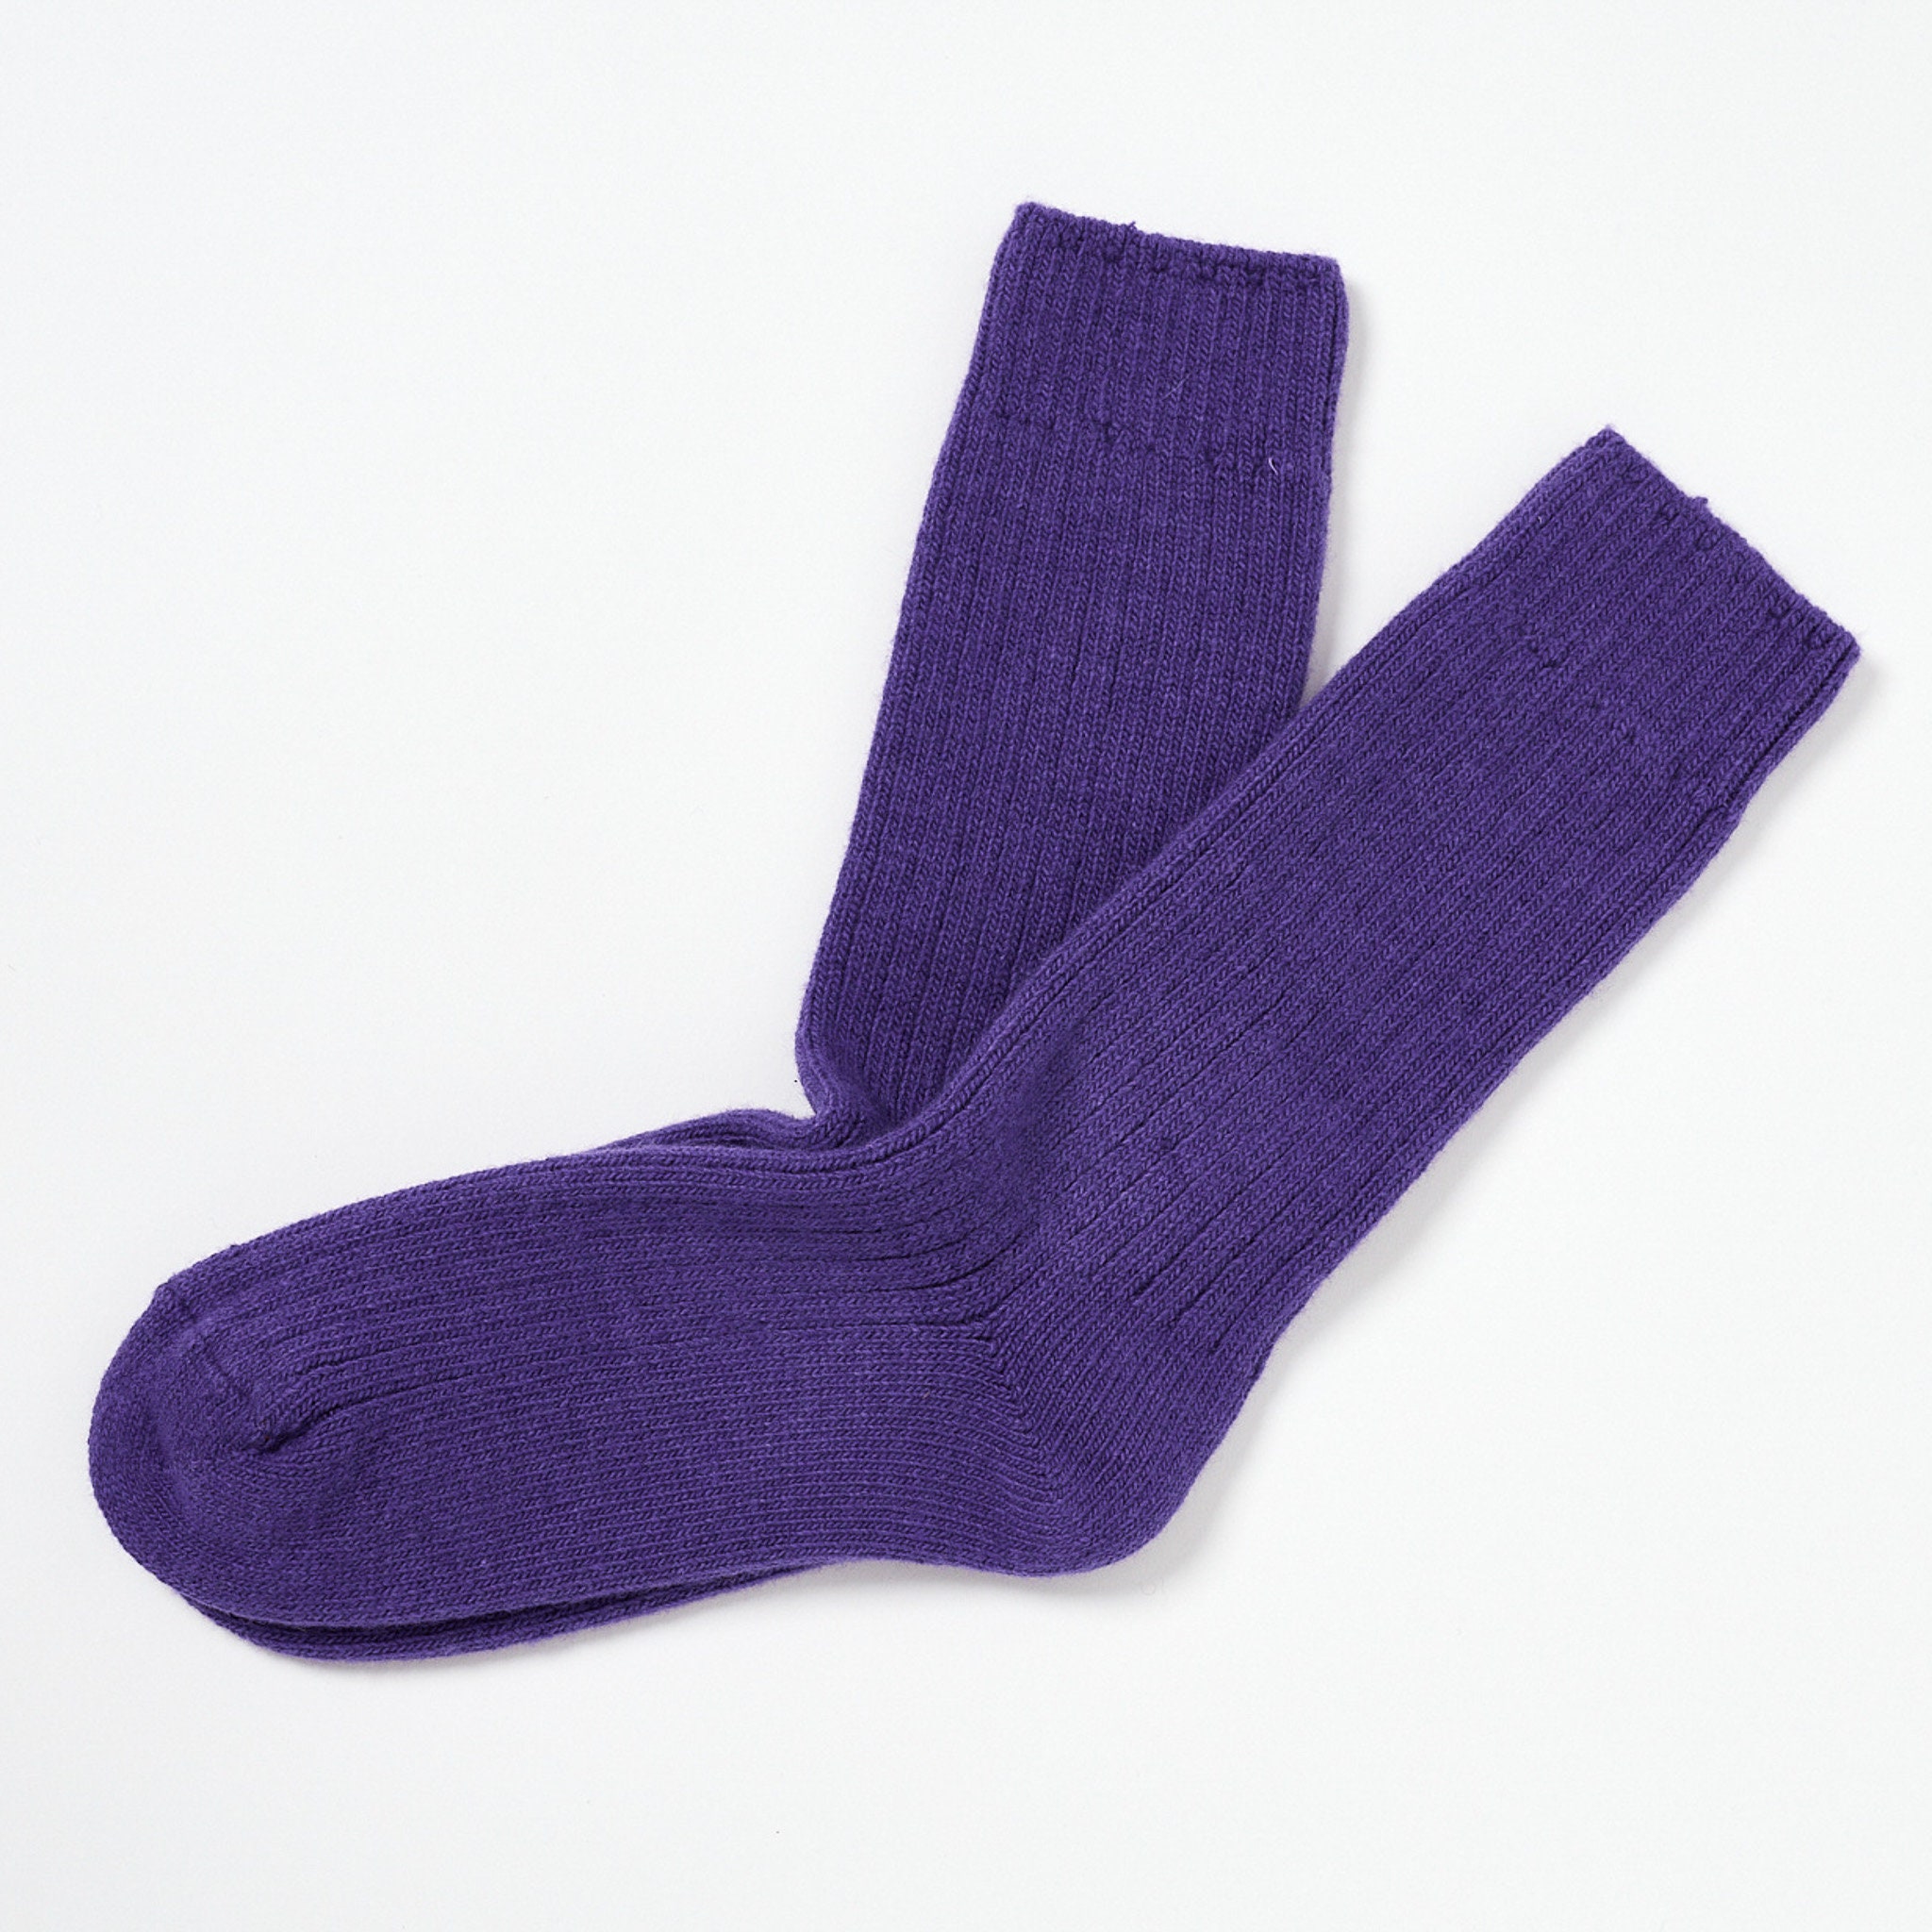 Cashmere Blend Socks - Purple Haze Size M Uk 4-7 | Eur 37-41/Us 5.5 -8.5